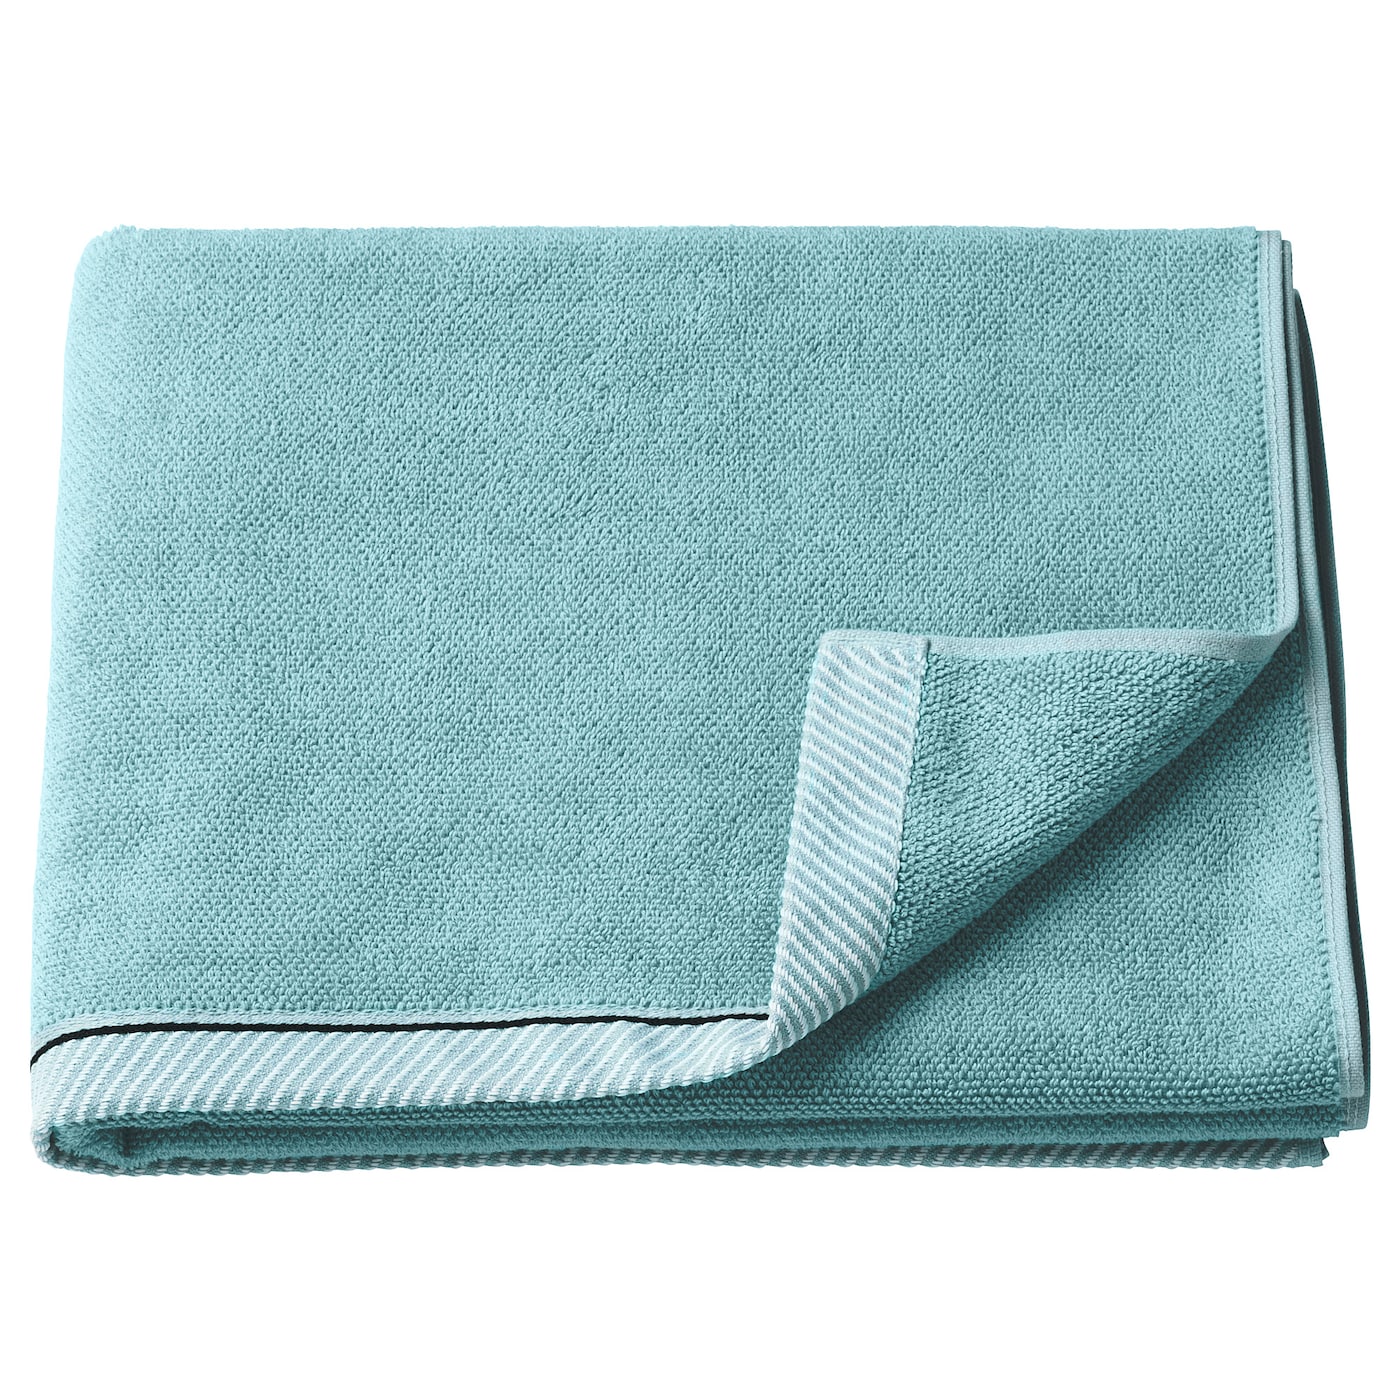 VIKFJäRD - ręcznik kąpielowy jasnoniebieski